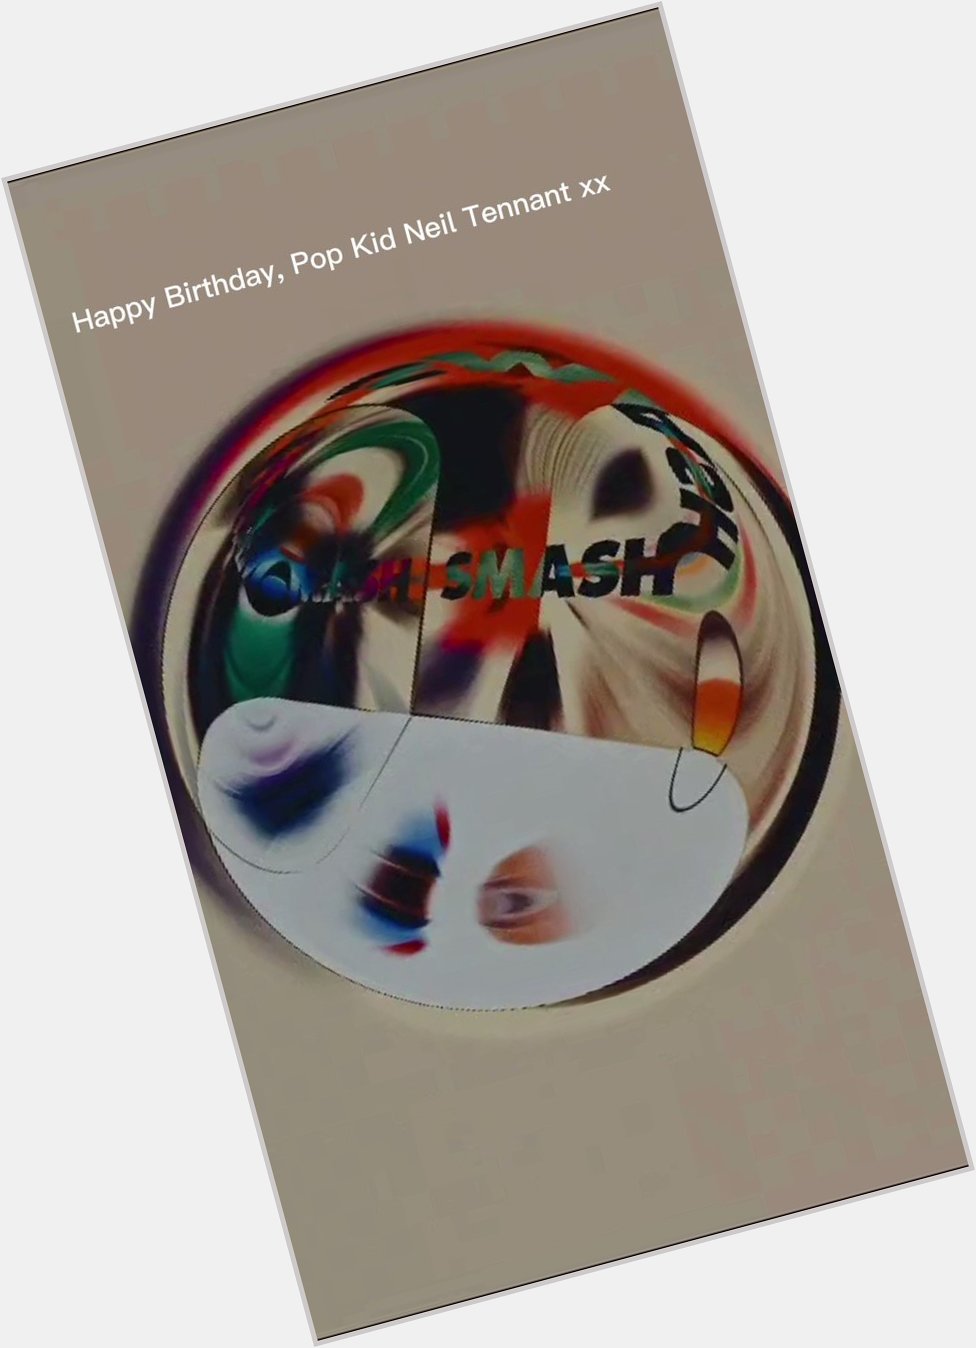 Happy Birthday Neil Tennant xxx 